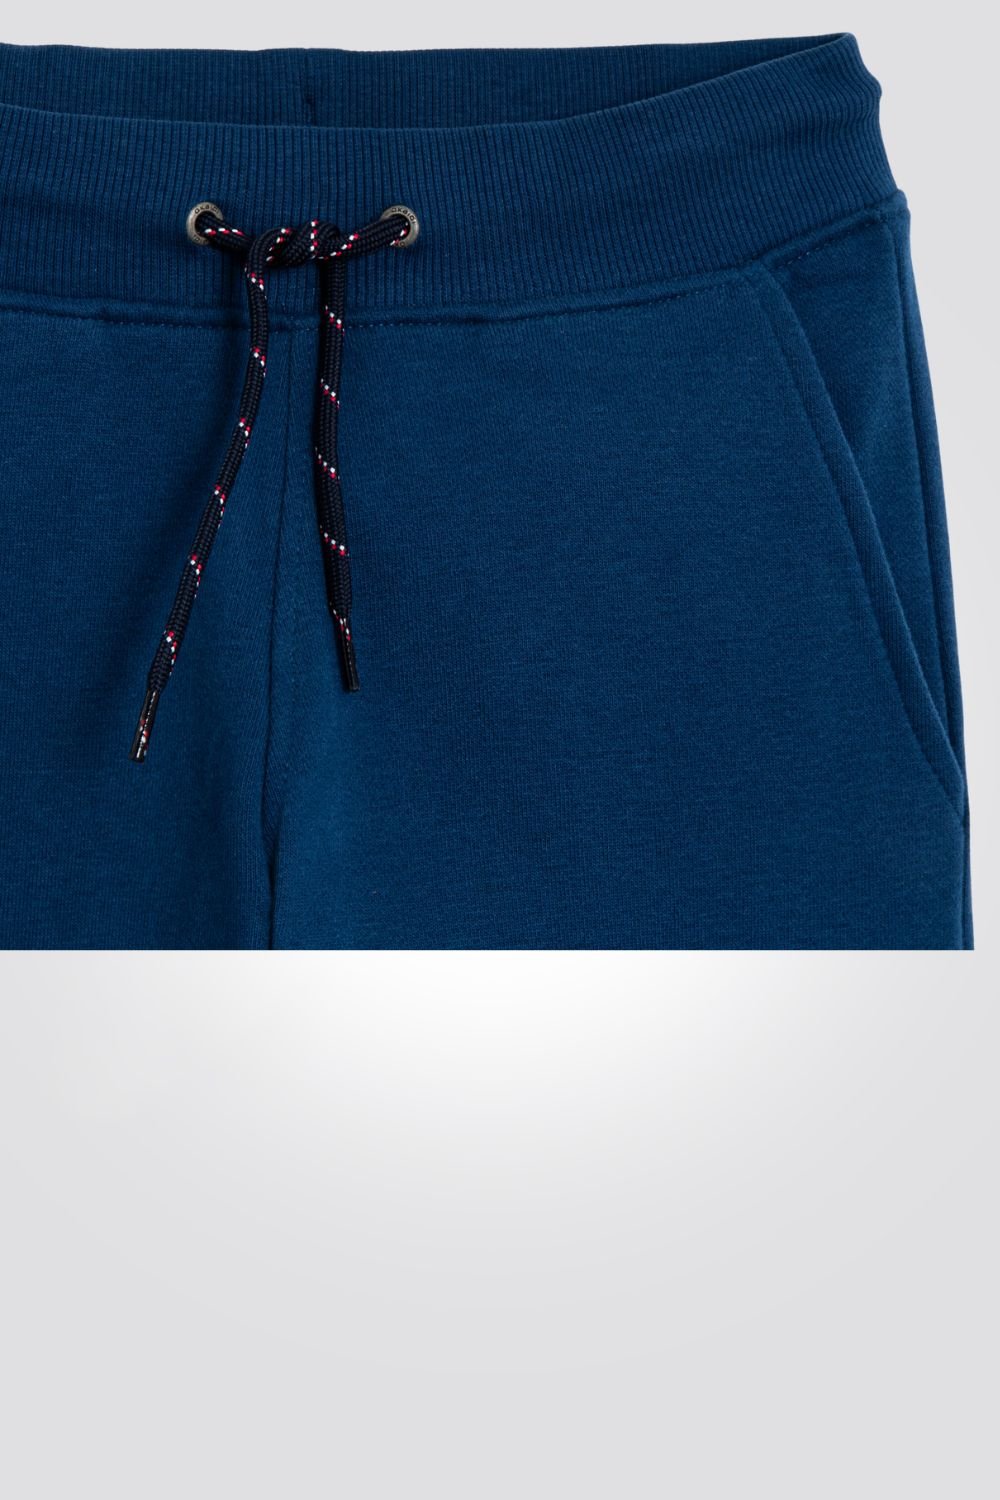 OKAIDI - מכנסי טרנינג כחול אקווה ילדים - MASHBIR//365